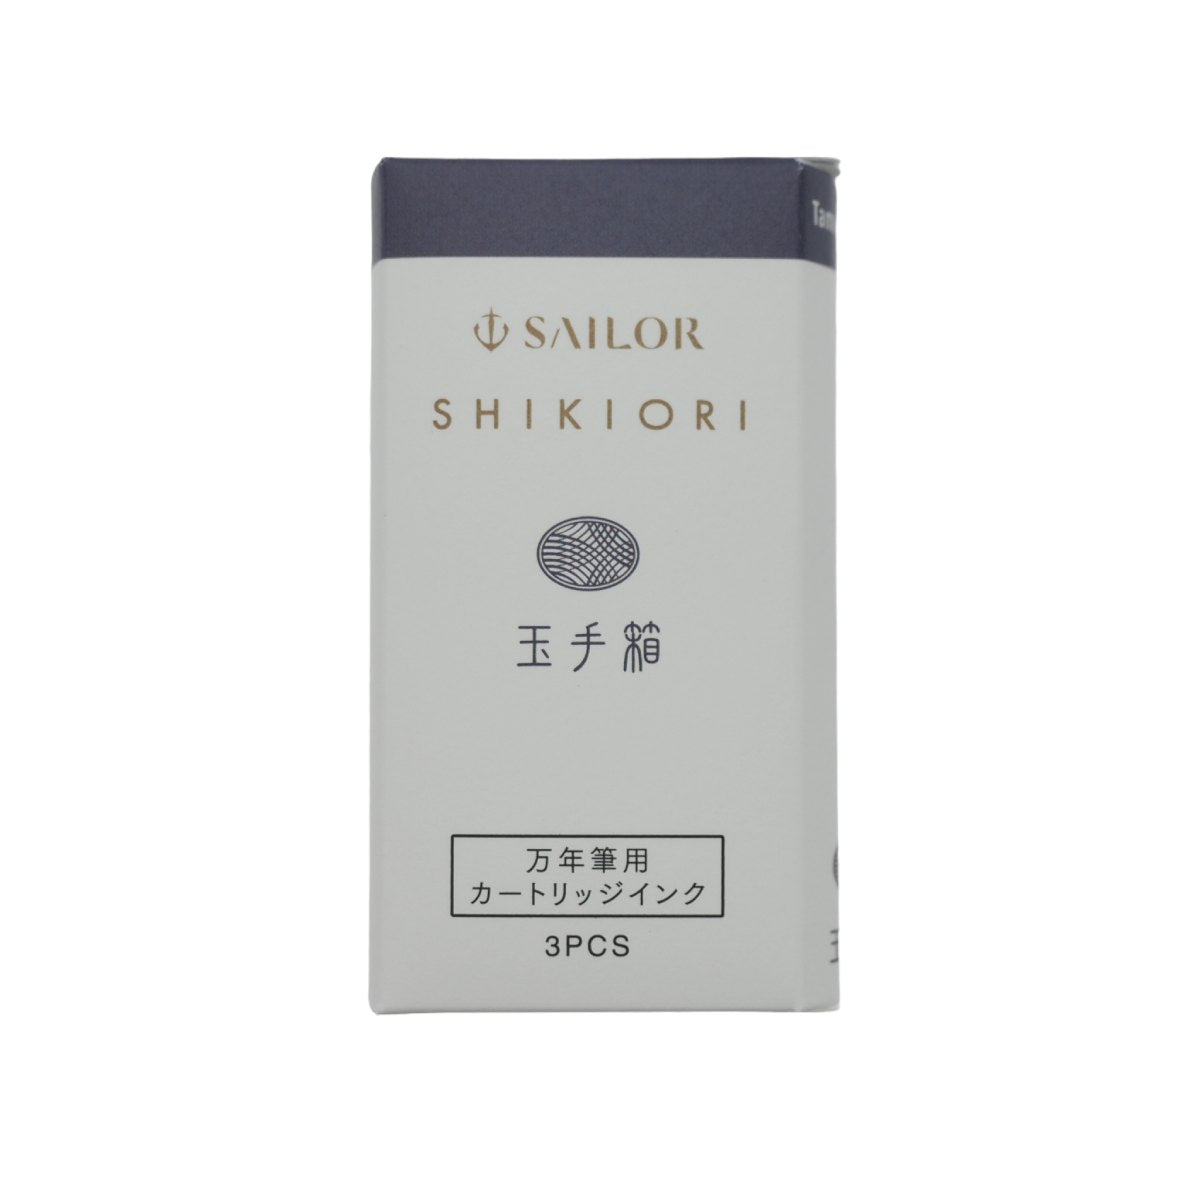 Sailor Shikiori Ink Cartridges - Tamatebako